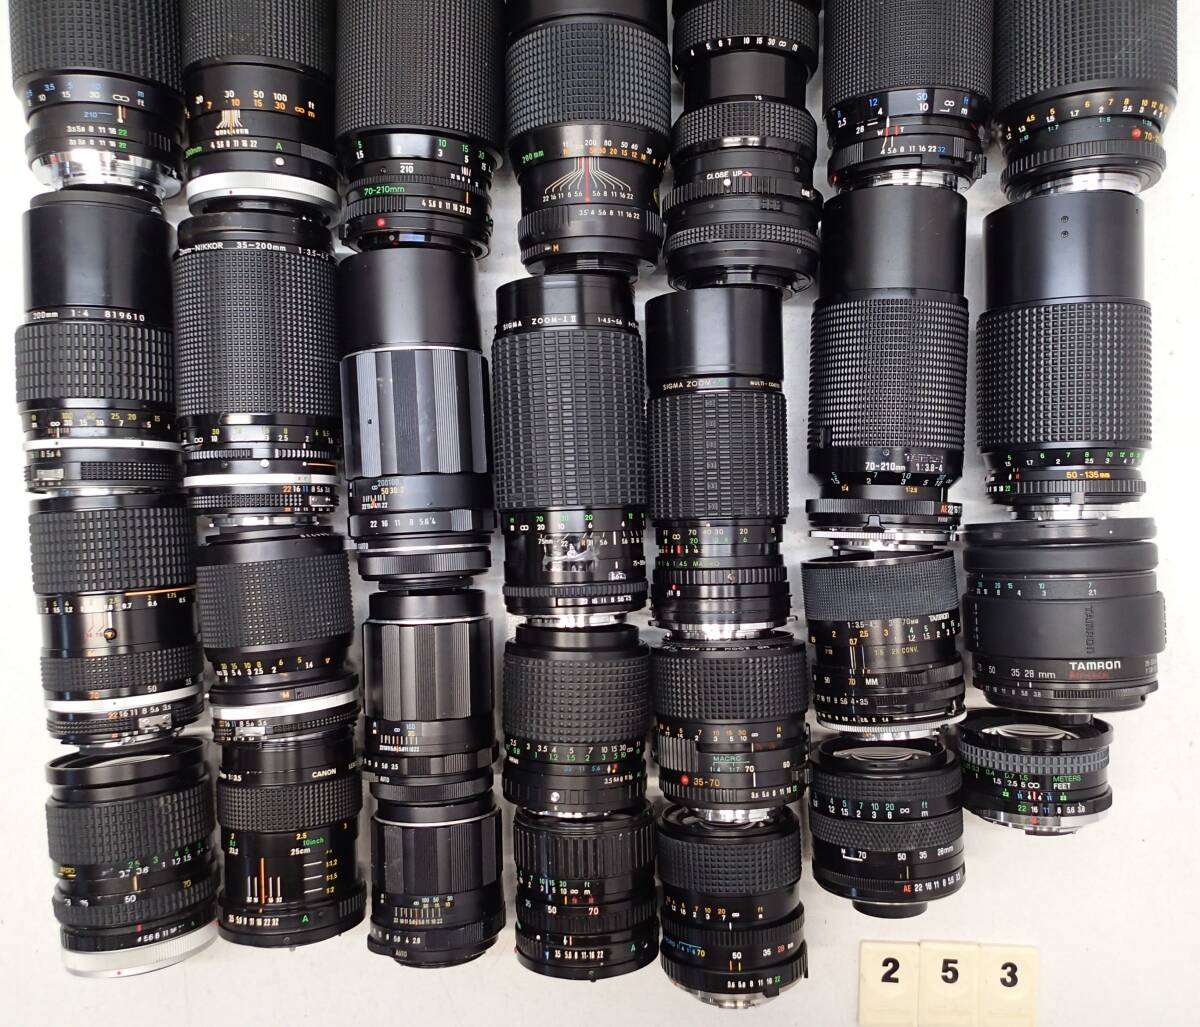 M253D 大量 MF レンズ ３５個 Canon SSC FD Nikon Nikkor- Q C Topman KIRON Super-komura COSINA Rokkor ZOOM Tokina 等 ジャンクの画像8